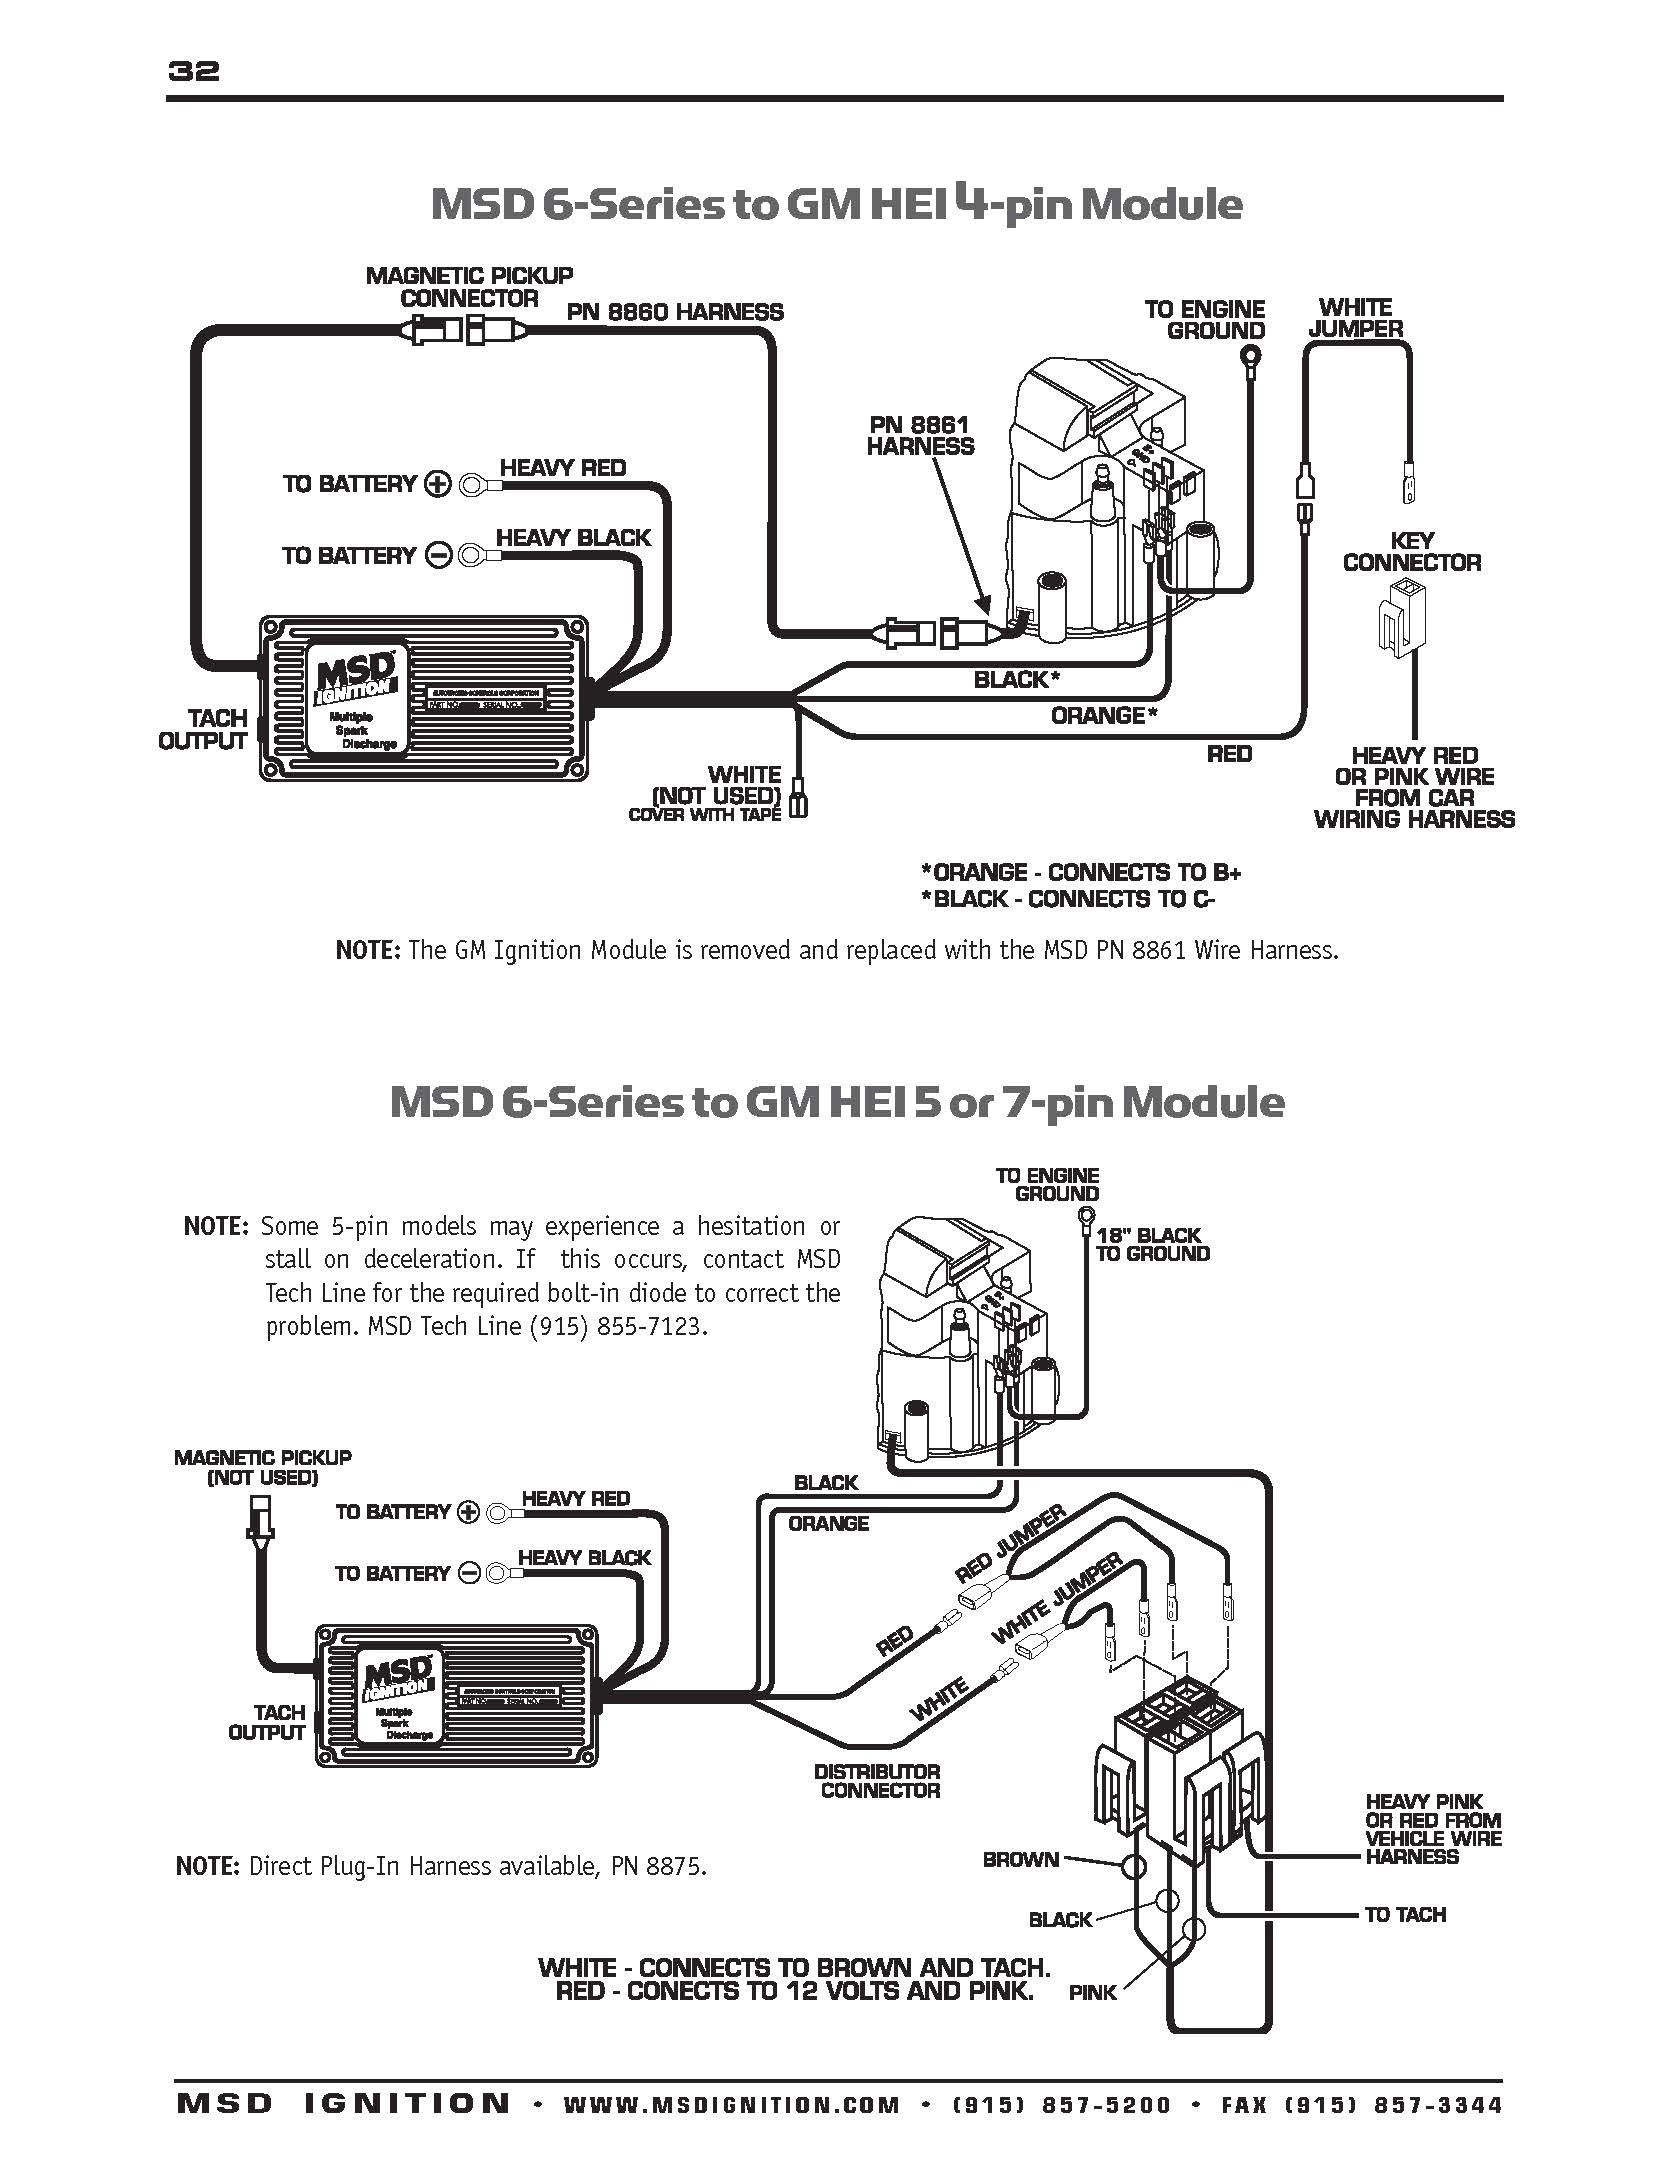 mallory tach wiring diagram wiring diagram mallory ignition tach wiring diagram